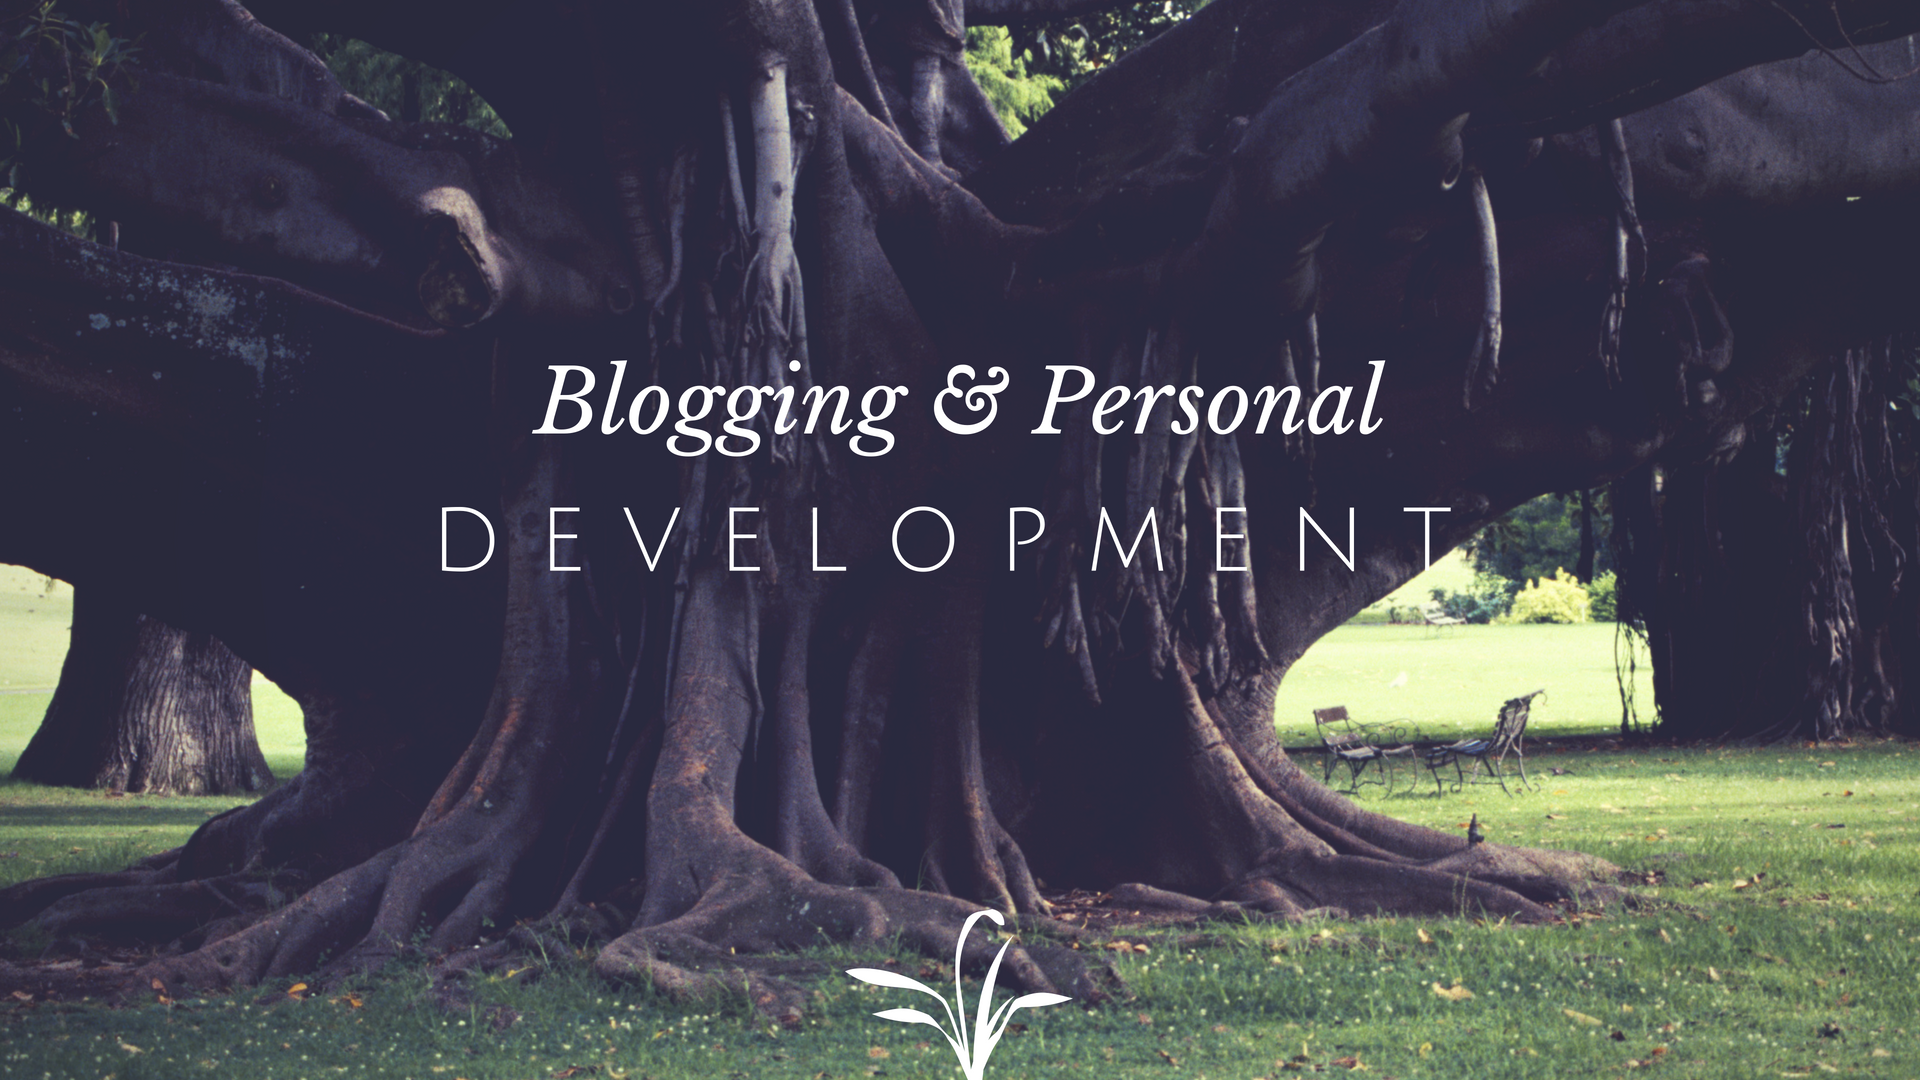 Does blogging help personal development?